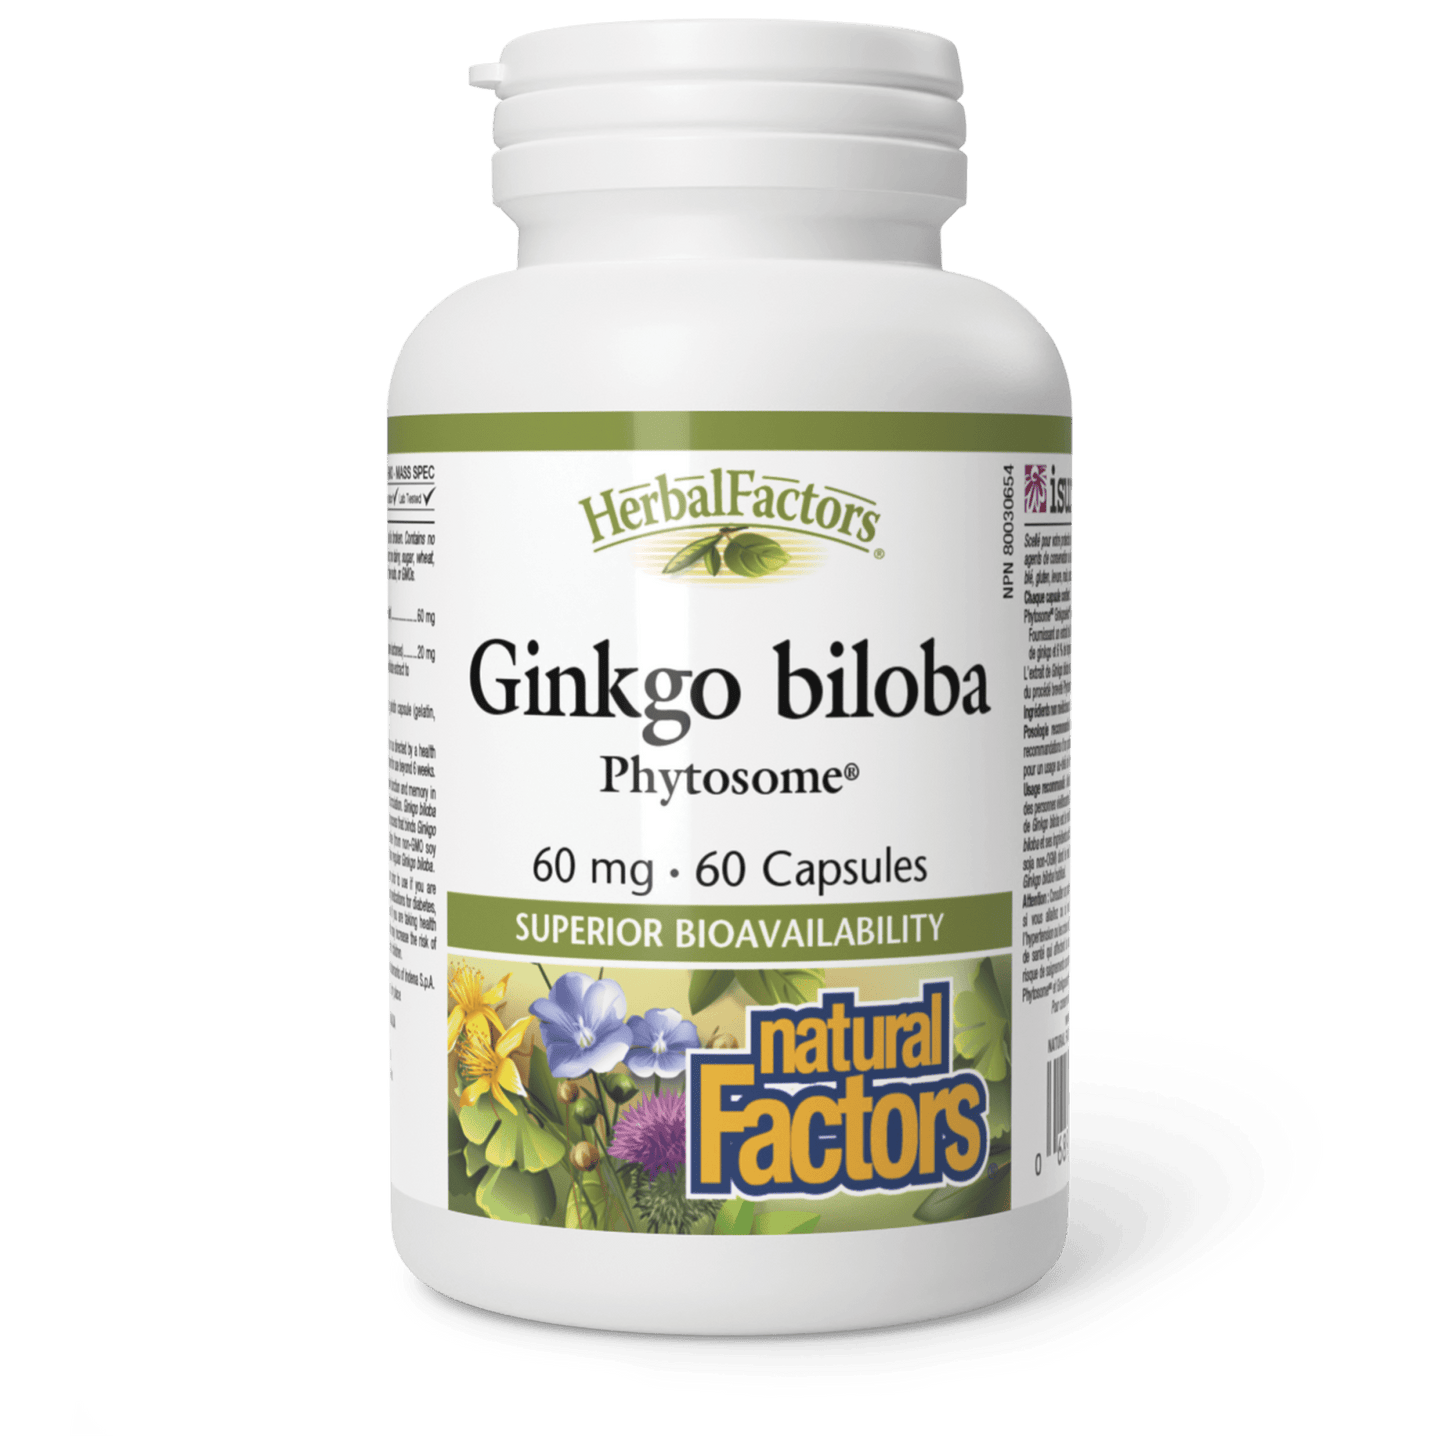 Ginkgo biloba Phytosome 60 mg, HerbalFactors, Natural Factors|v|image|4805